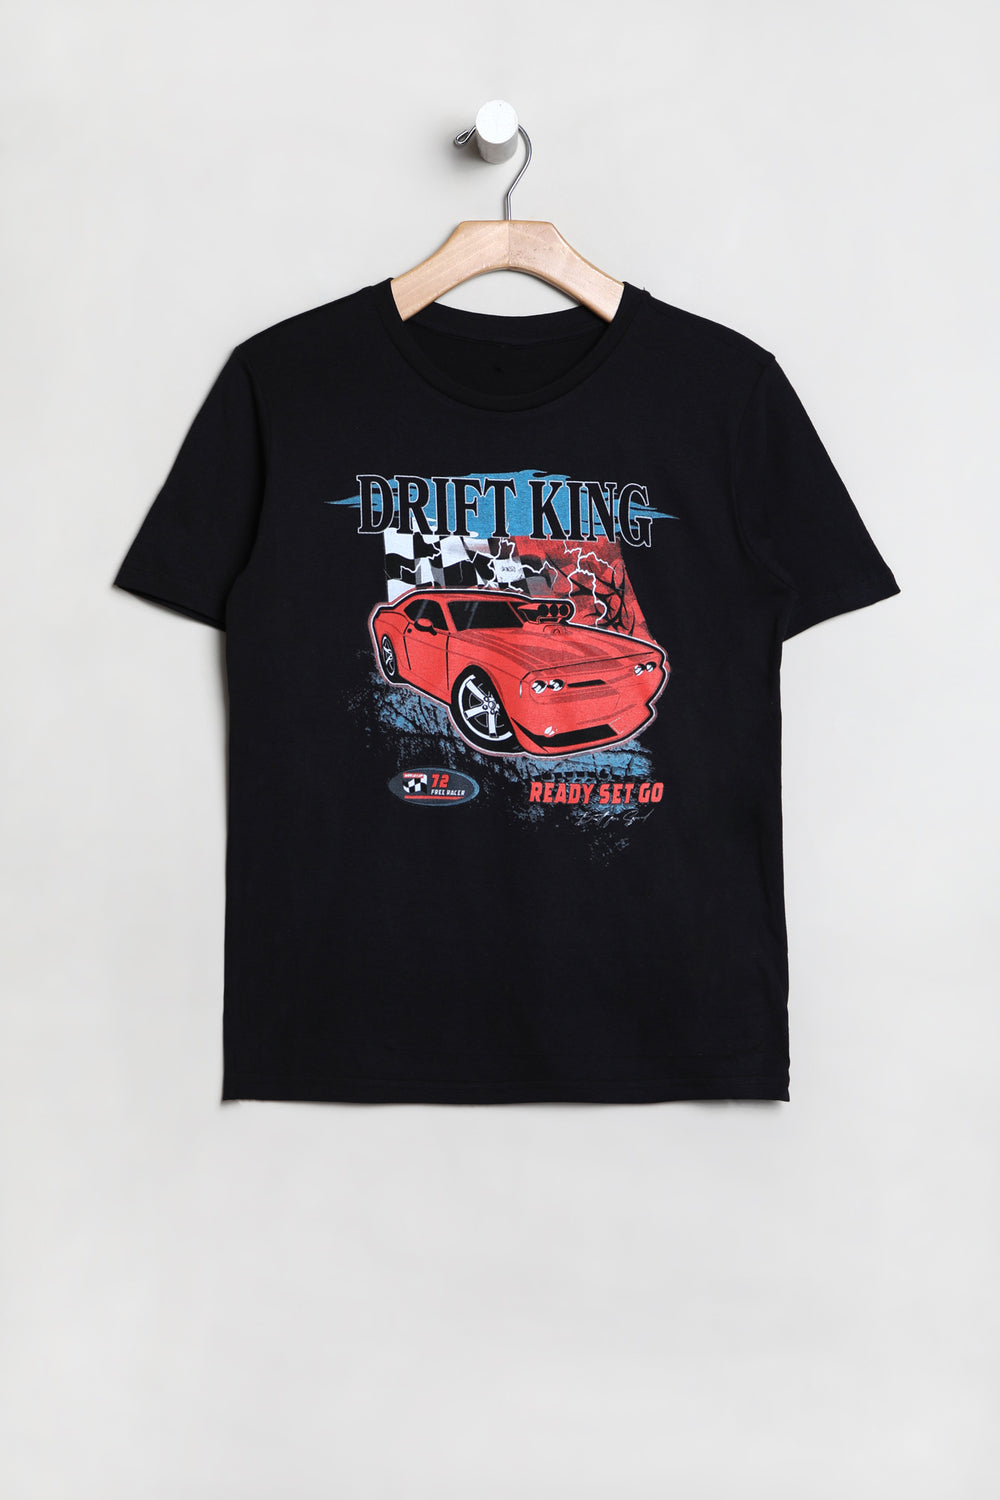 West49 Youth Drift King T-Shirt West49 Youth Drift King T-Shirt